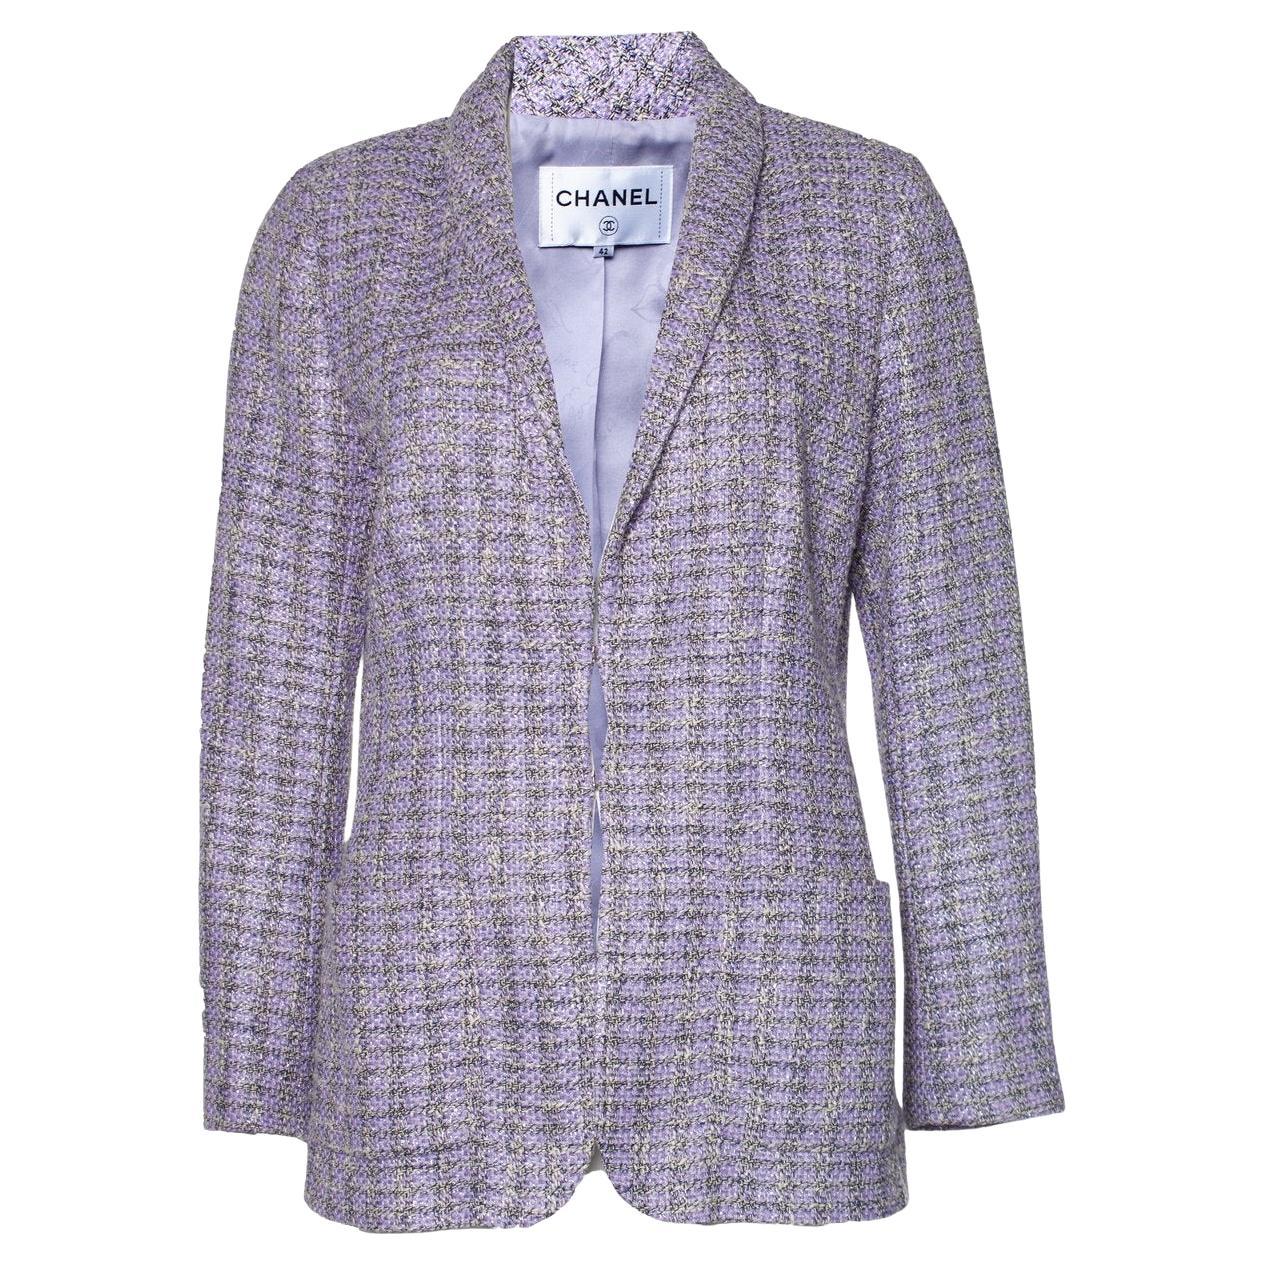 Chanel Airport Runway Lavender Tweed Jacket For Sale